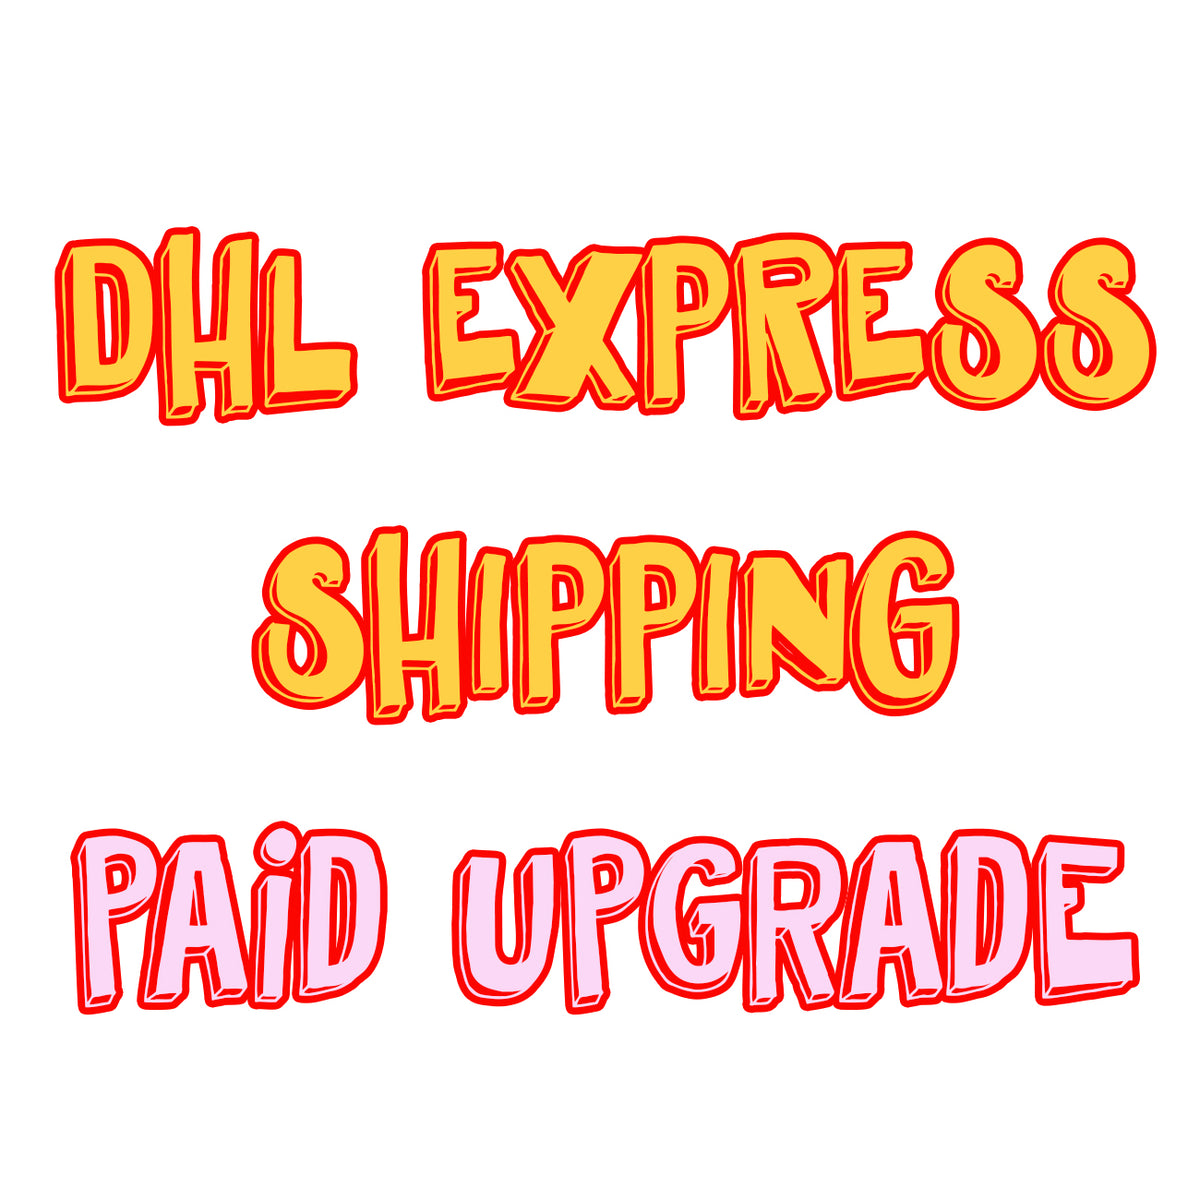 DHL Express Shipping - Paid Upgrade – EyecandyMonsters